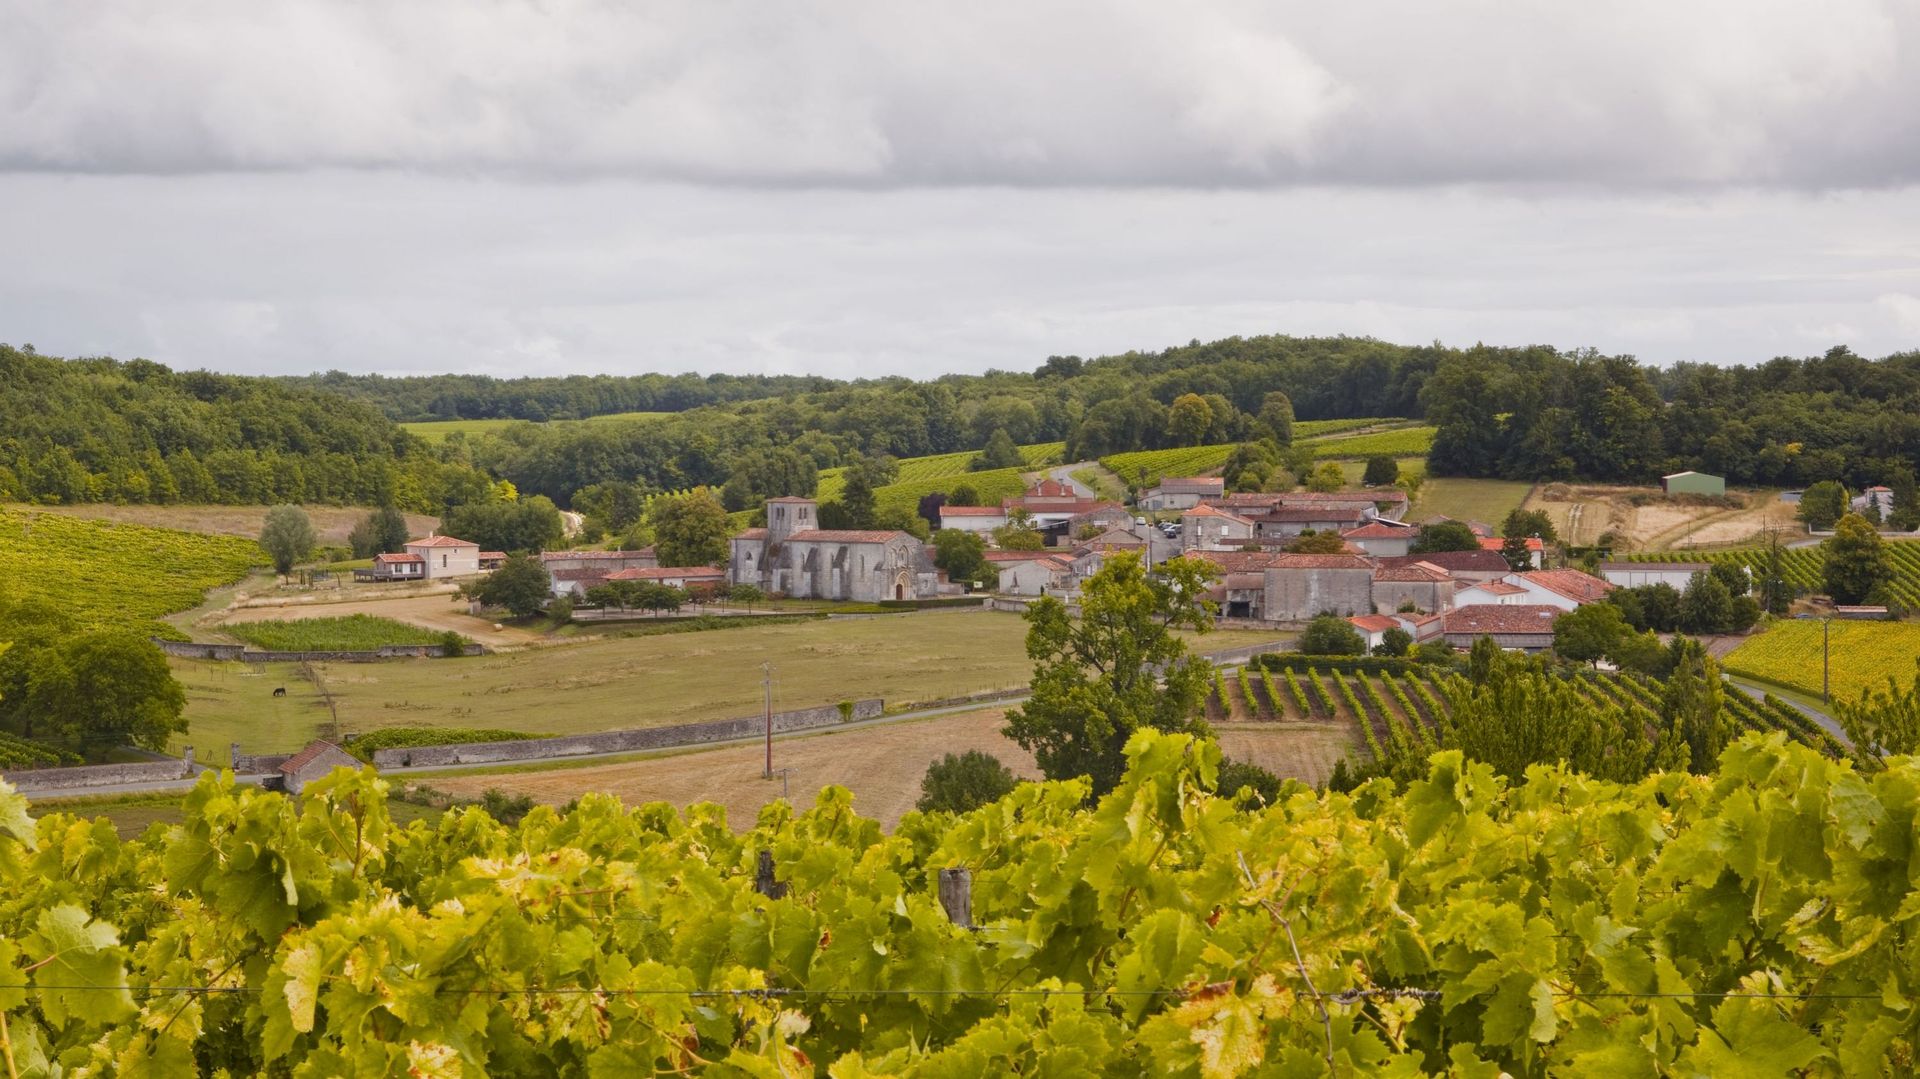 The village of Saint Preuil in Cognac.